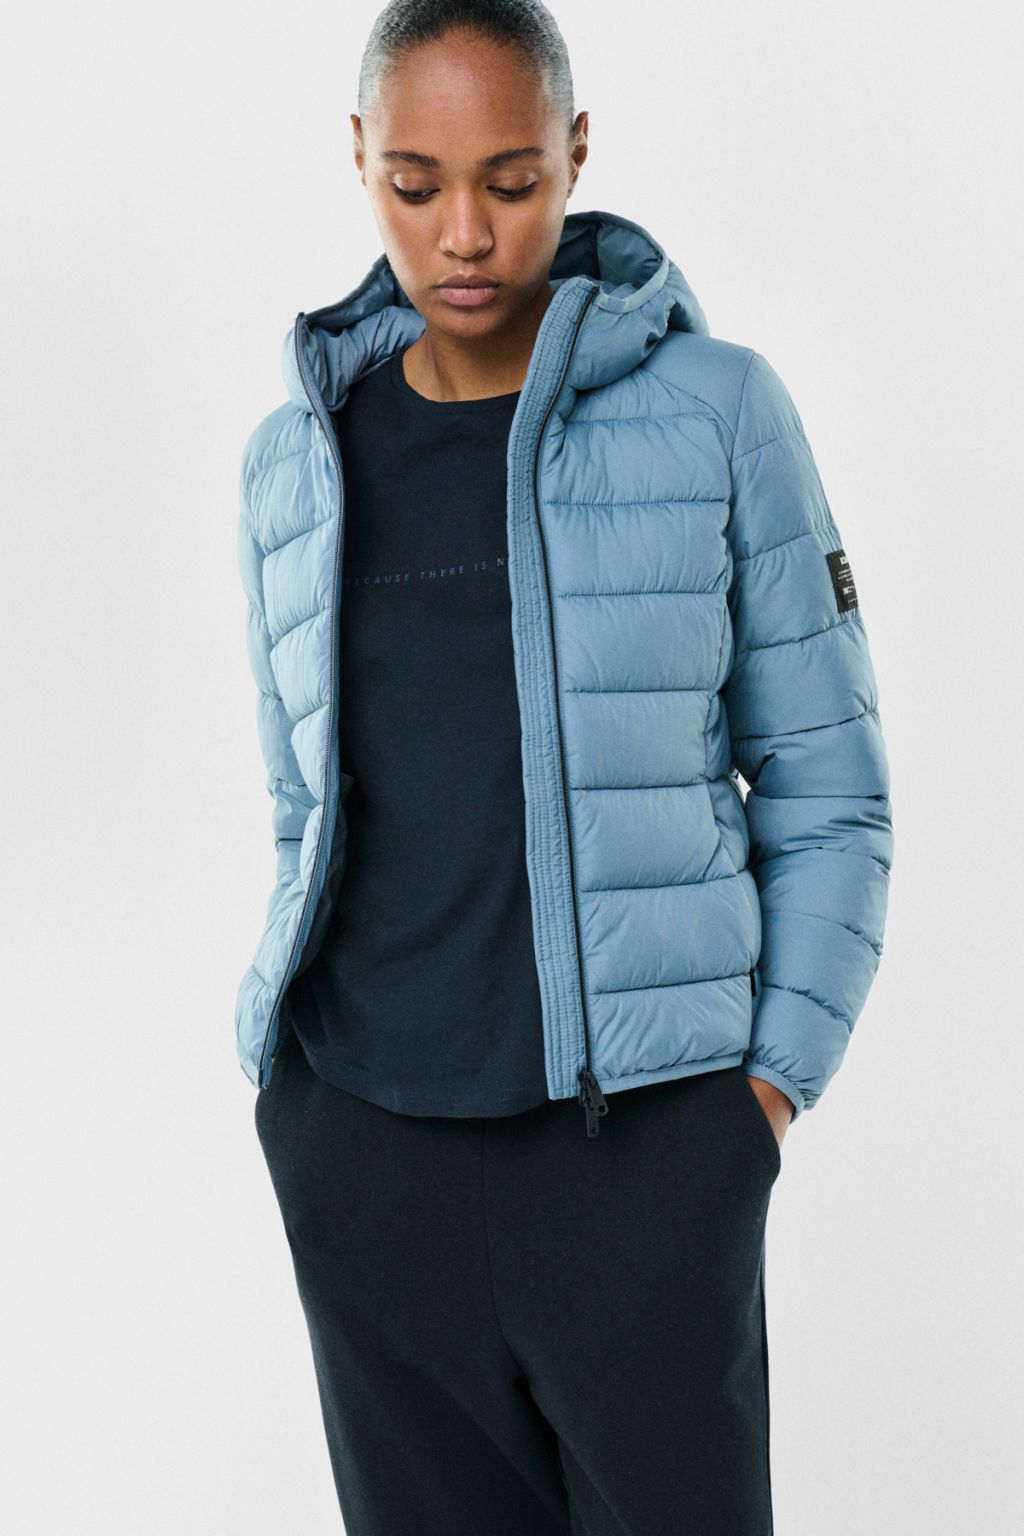 Aspalf Jacket Woman Artic Blue XL